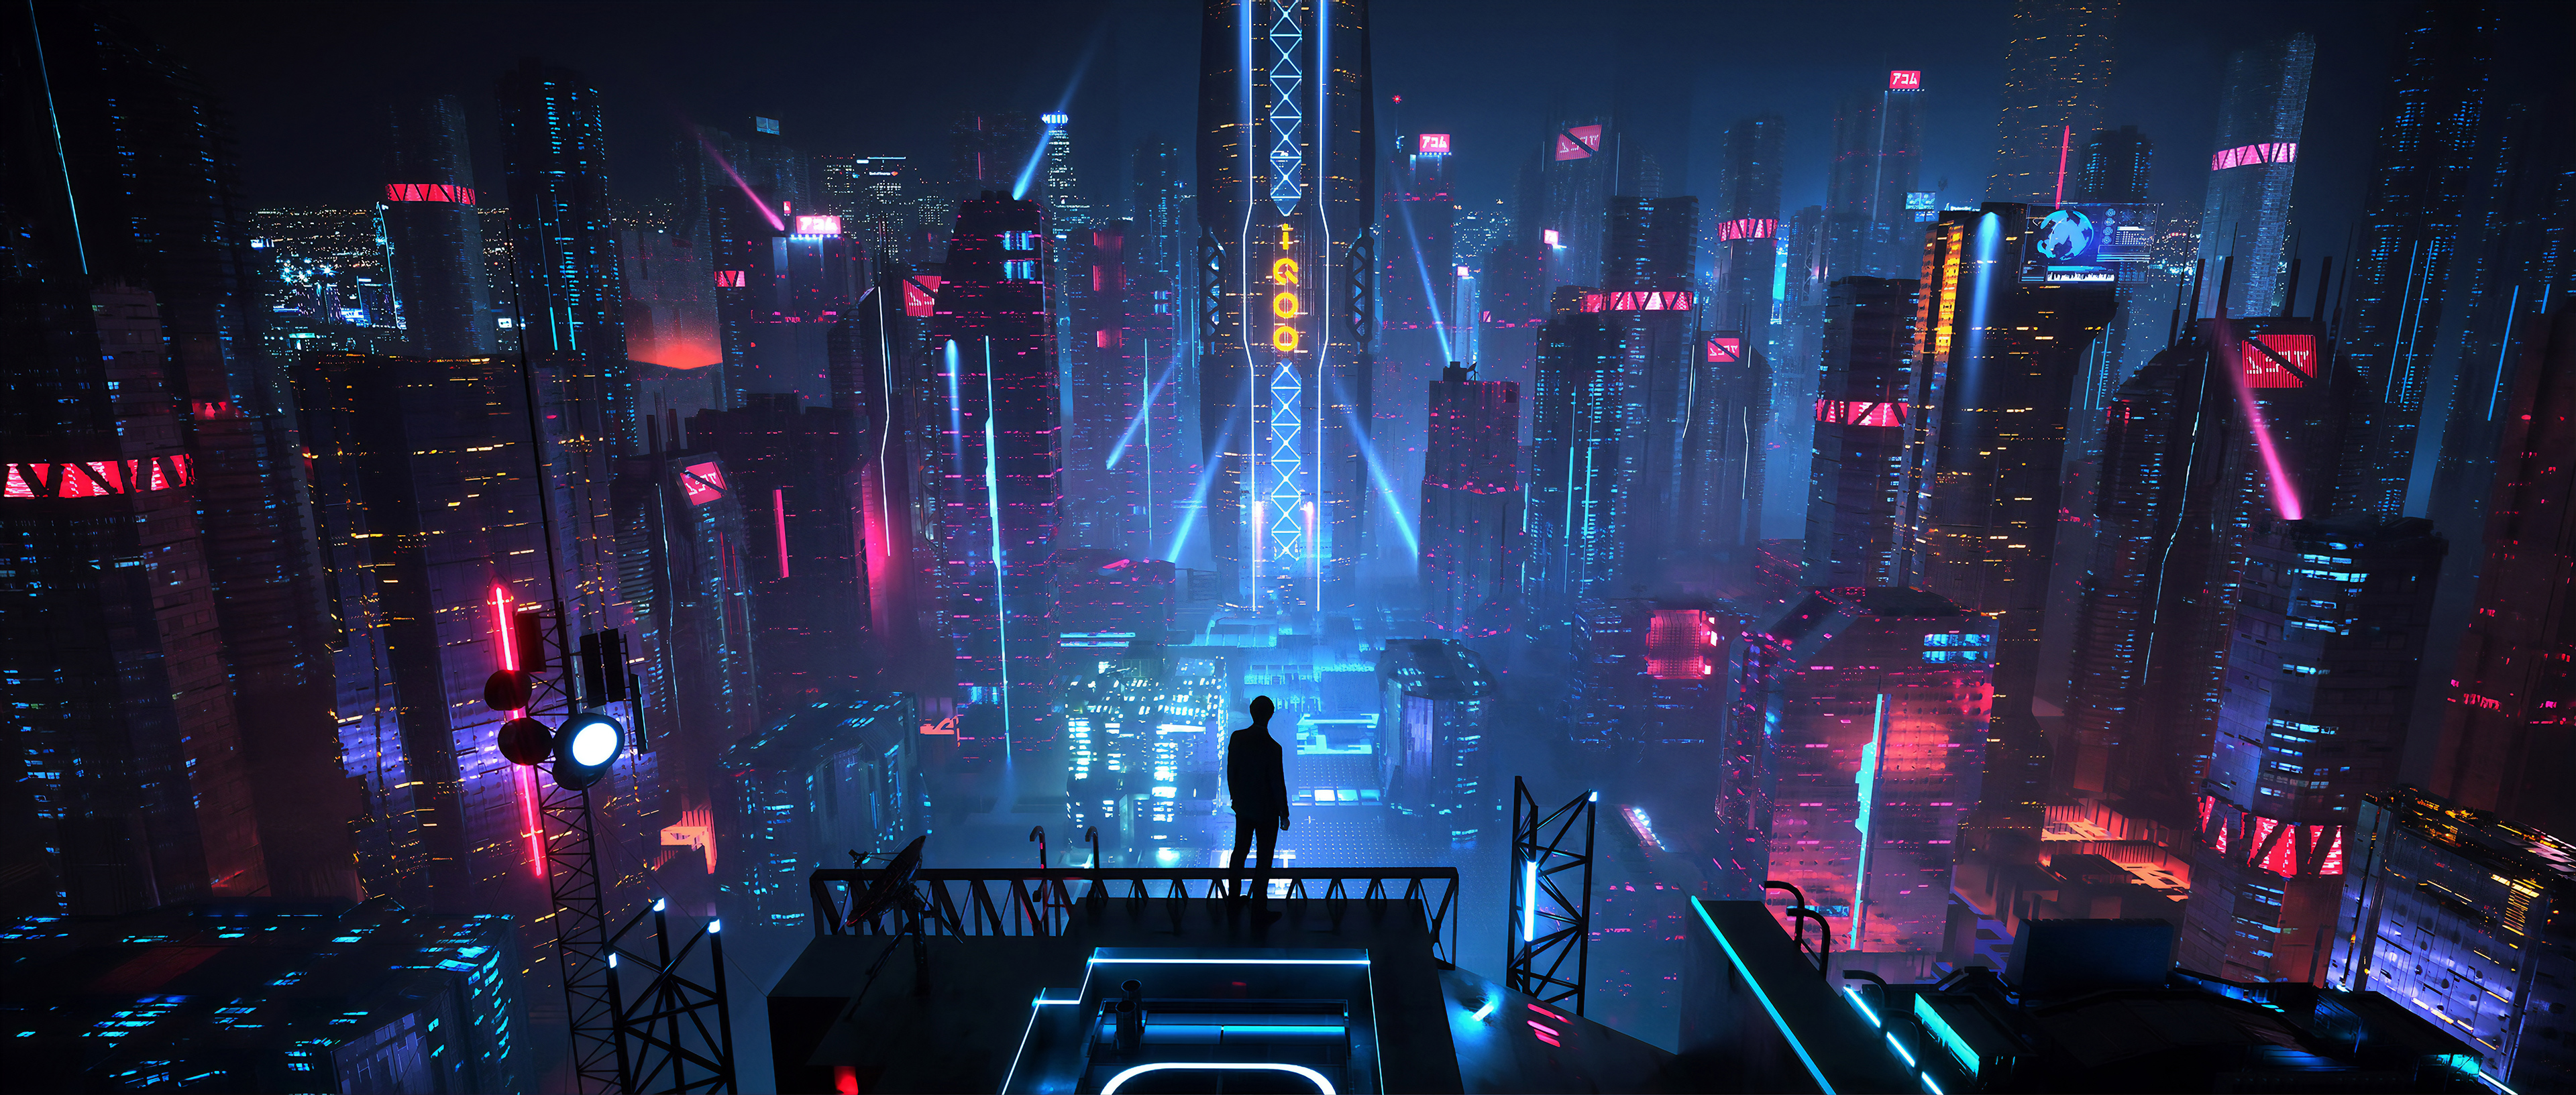 Digital Art Men City Futuristic Night Neon Science Fiction Futuristic City Cyberpunk Xuteng Pan Envi 3840x1633